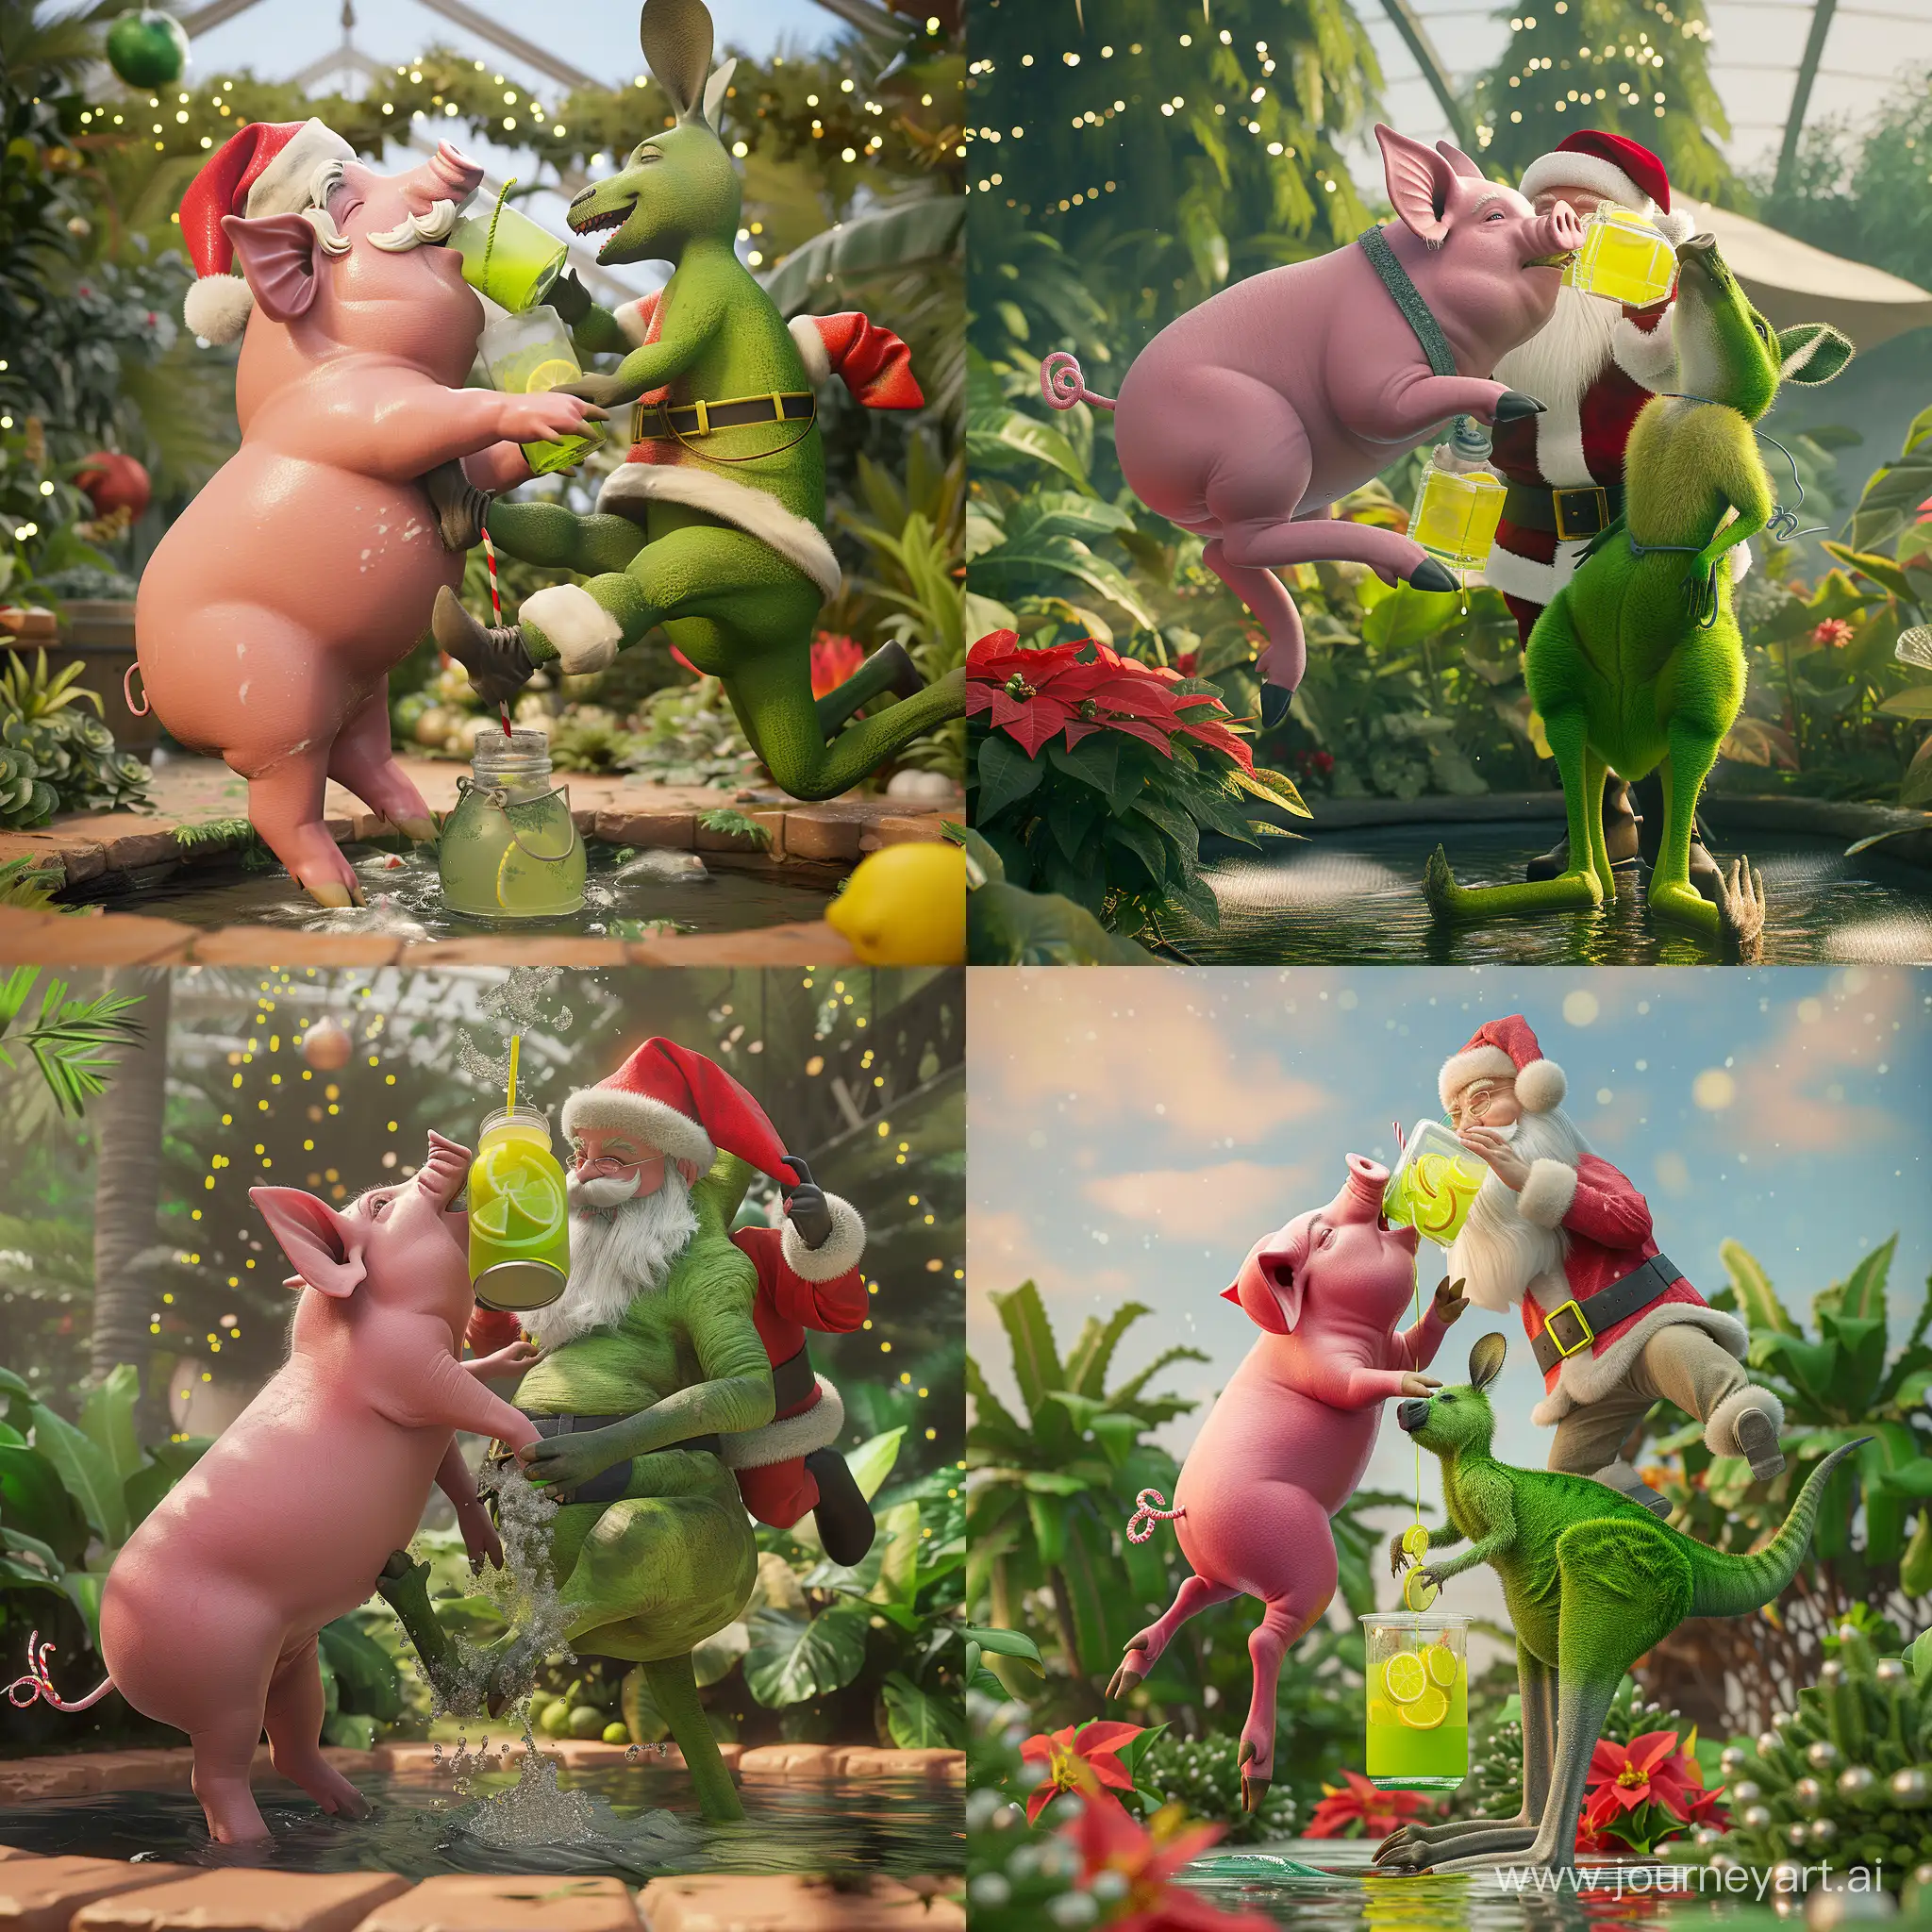 Whimsical-Encounter-Pink-Pig-Kisses-Green-Kangaroo-in-Botanical-Garden-with-Santa-Claus